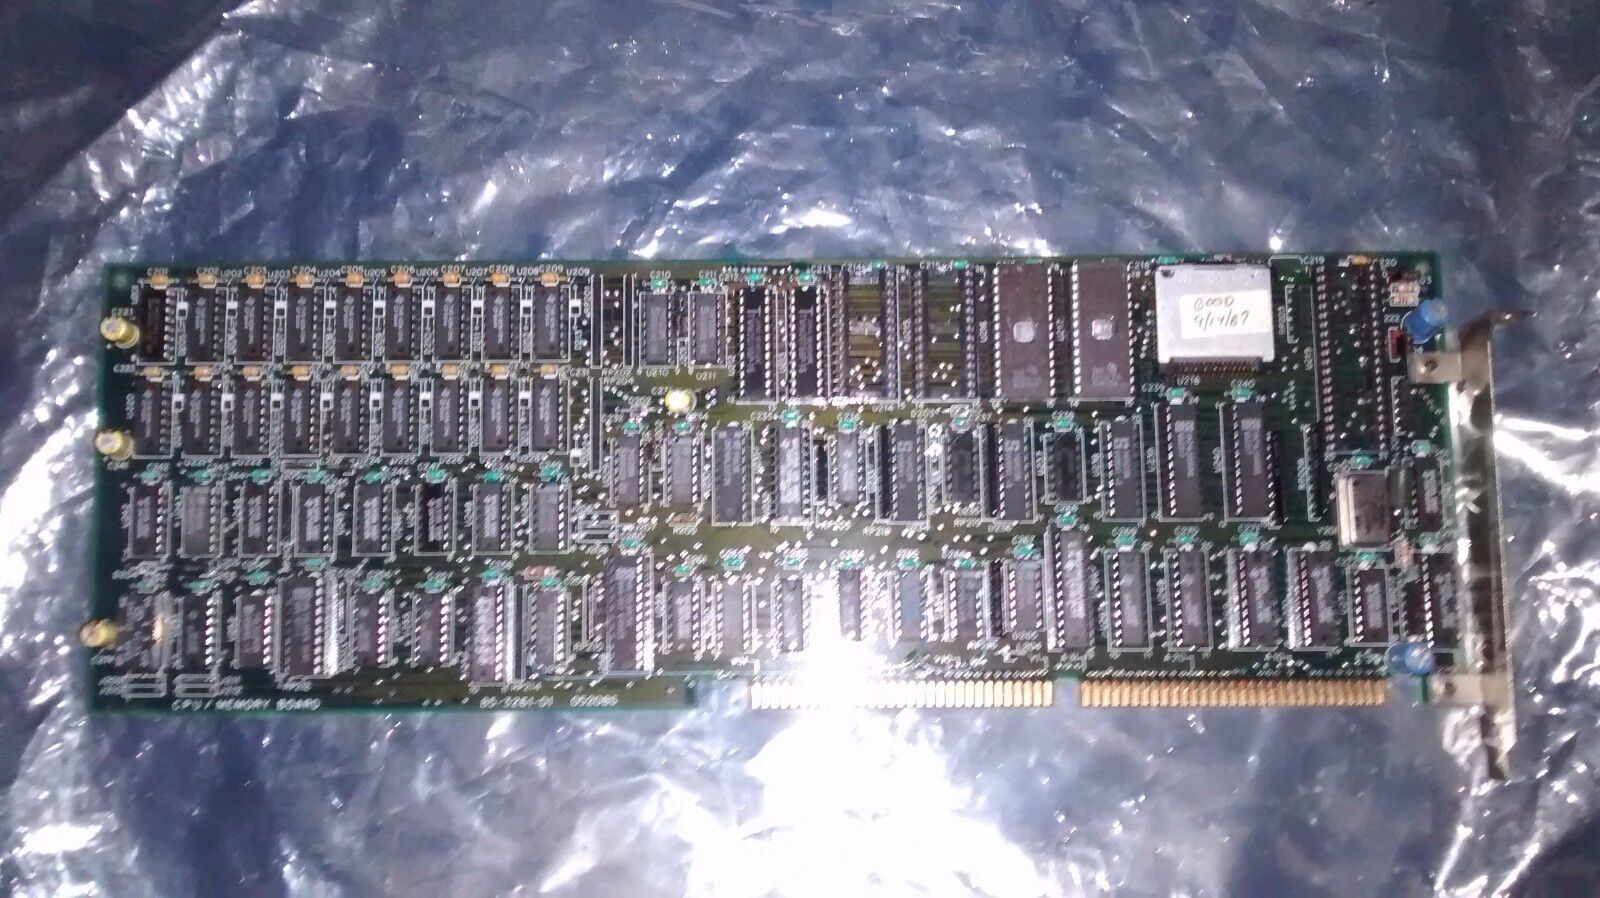 Vintage Zenith Computer - CPU / Memory Board 85-3261-01 052086 w/cpu